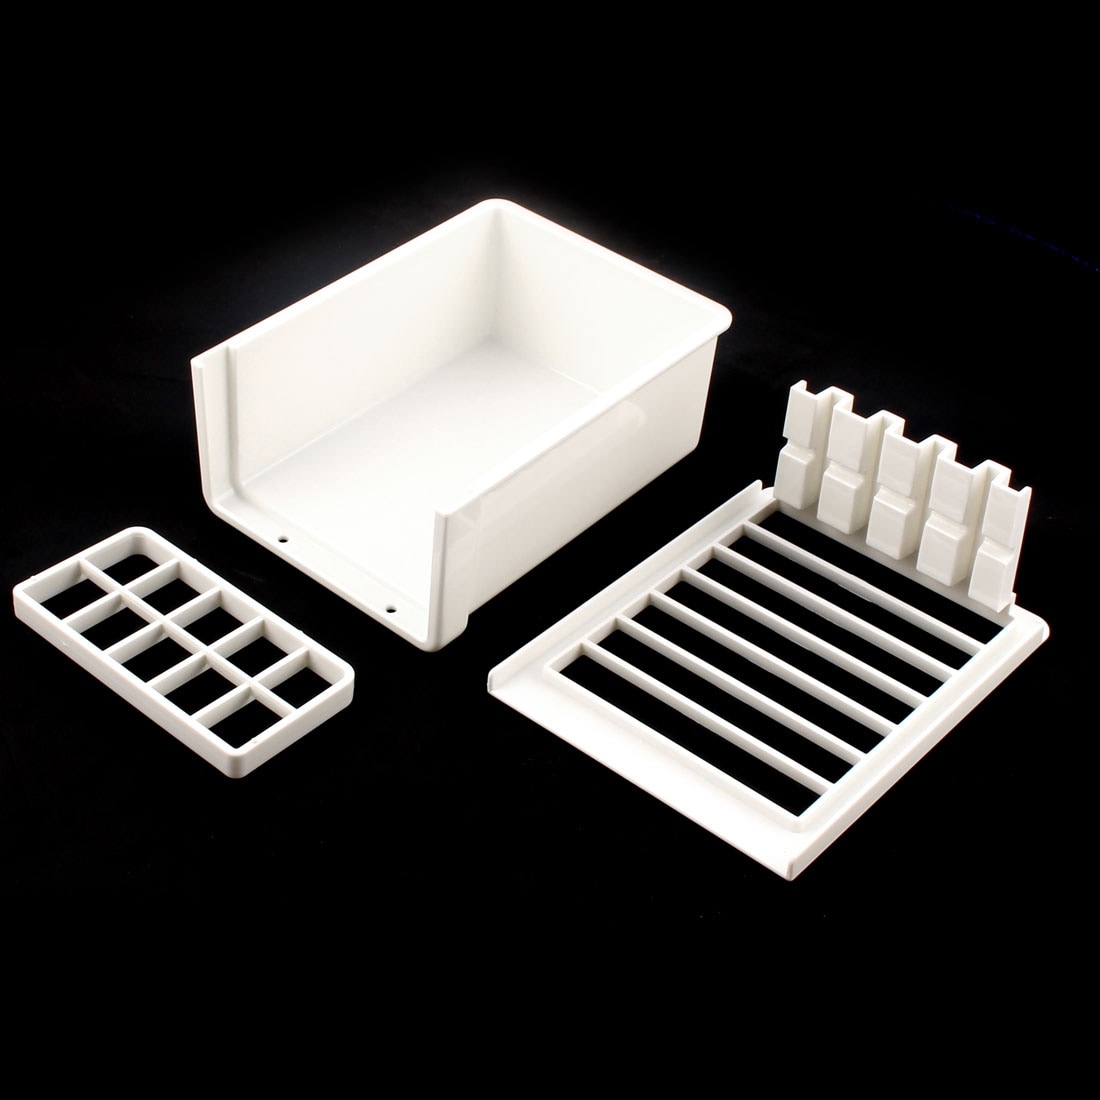 https://ak1.ostkcdn.com/images/products/is/images/direct/033266c27cf6da8083378ffac2a35a6e71c669cc/Kitchen-Plastic-Rectangle-Handmade-Press-Maker-Tofu-Mold-Cutter-Box-Case-White.jpg